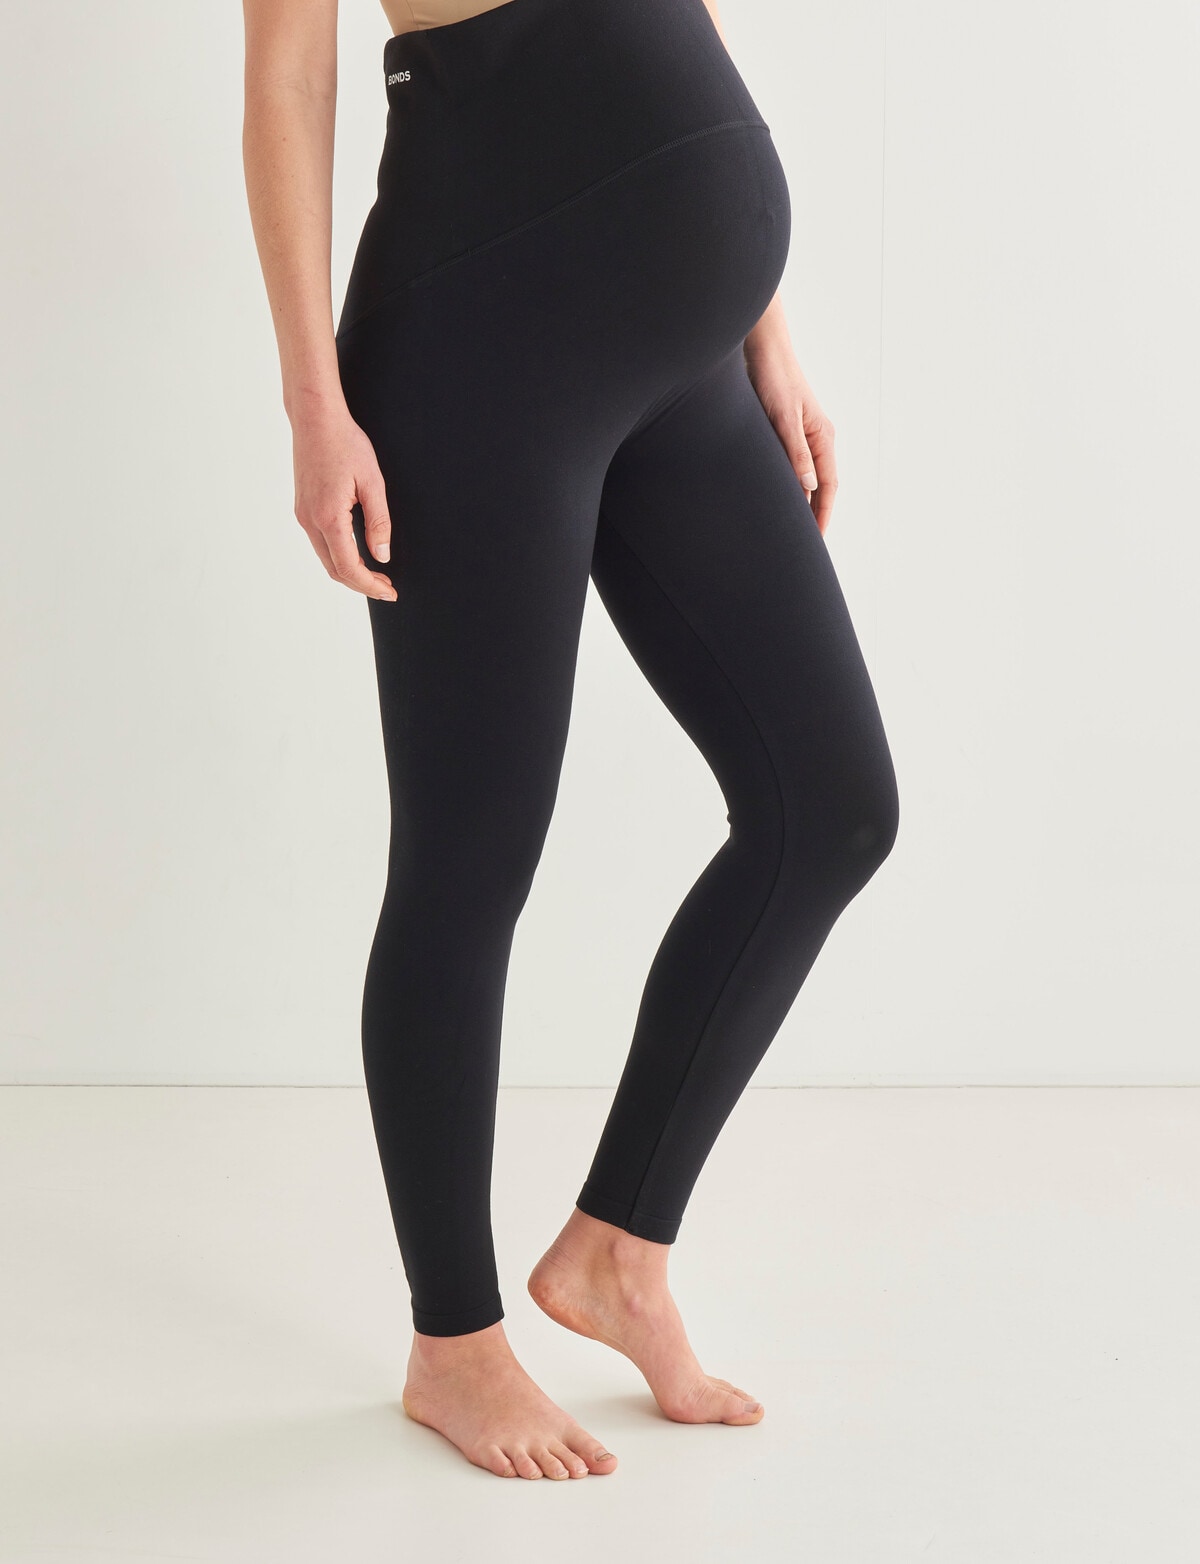 Bonds Women's Maternity Legging - Black - Size L-XL, BIG W